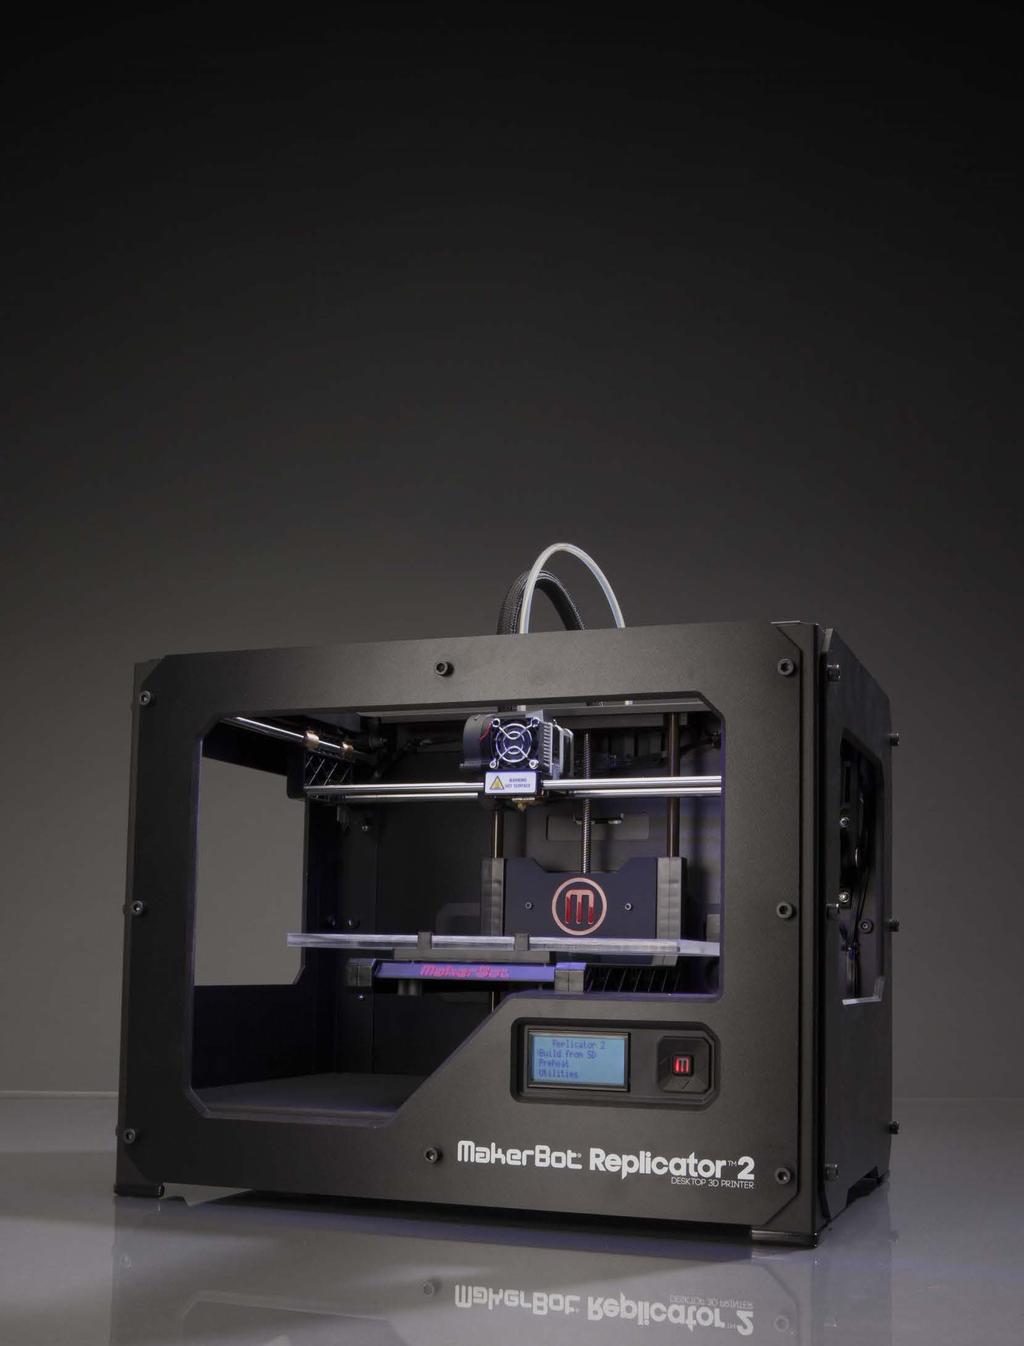 MakerBot Replicator 2 DESKTOP 3D PRINTER SINGLE EXTRUDER Welcome to prosumer 3D printing.